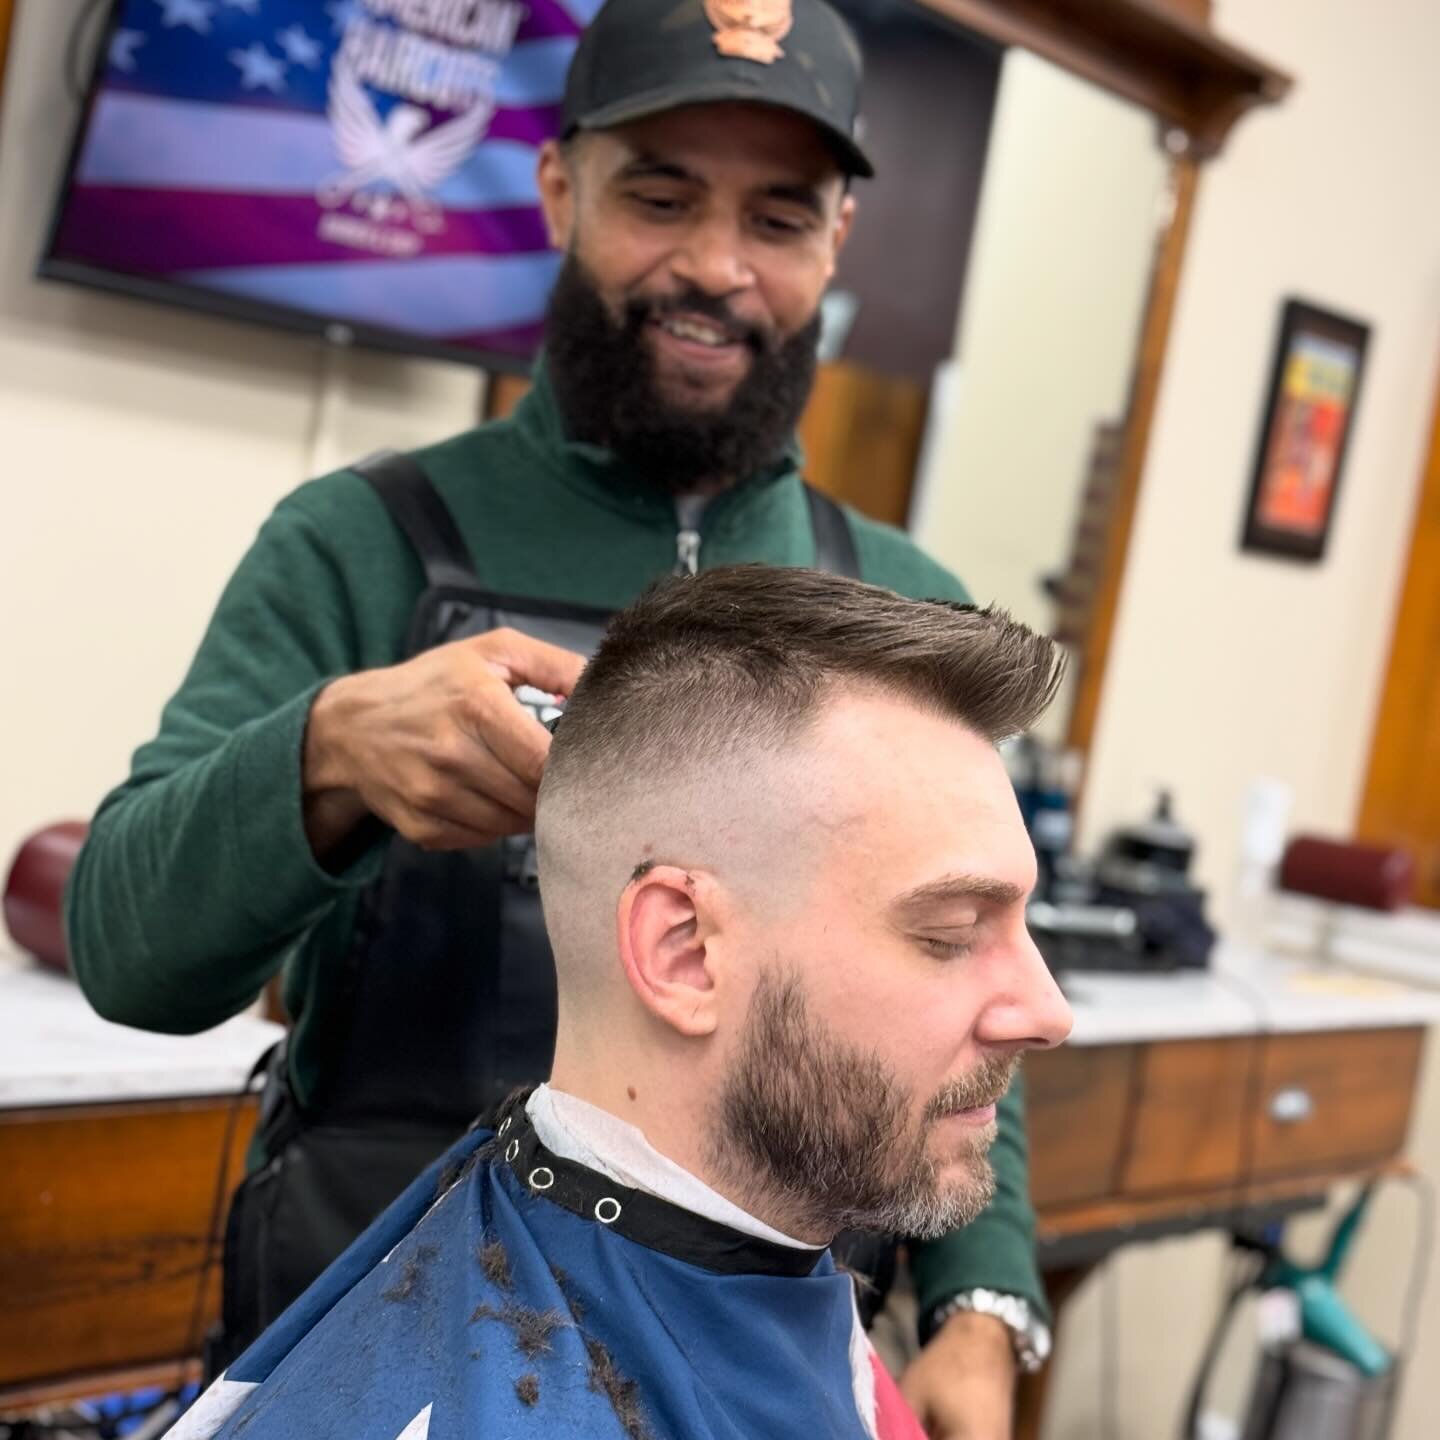 Razor Fade Haircut: A Modern Guide for Stylish Men - Judes Barbershop